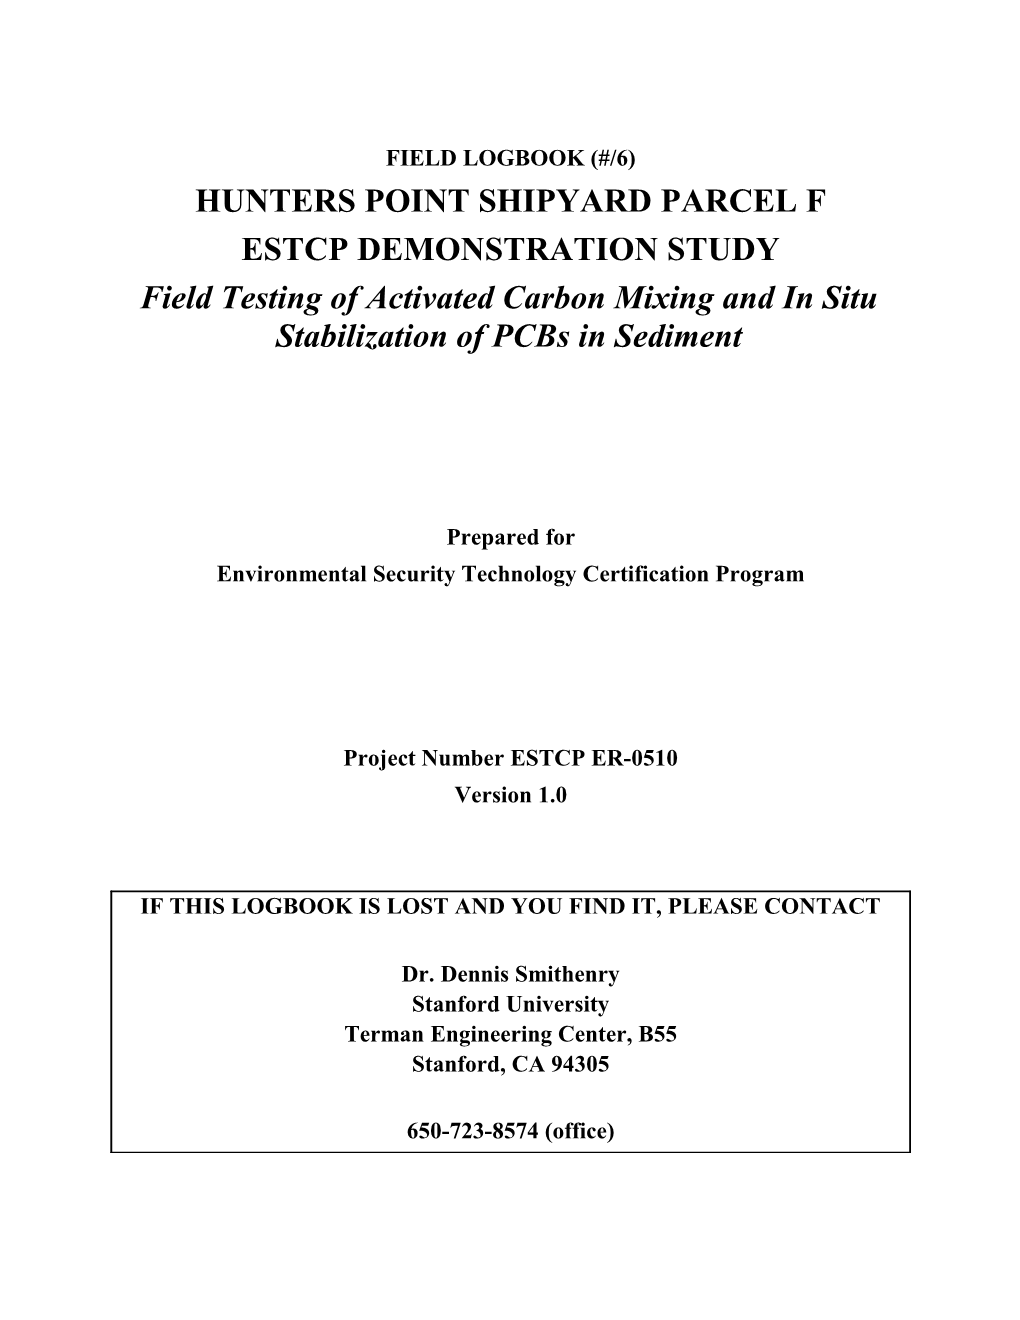 Hunters Point Shipyard Parcel F ESTCP Demonstration Study